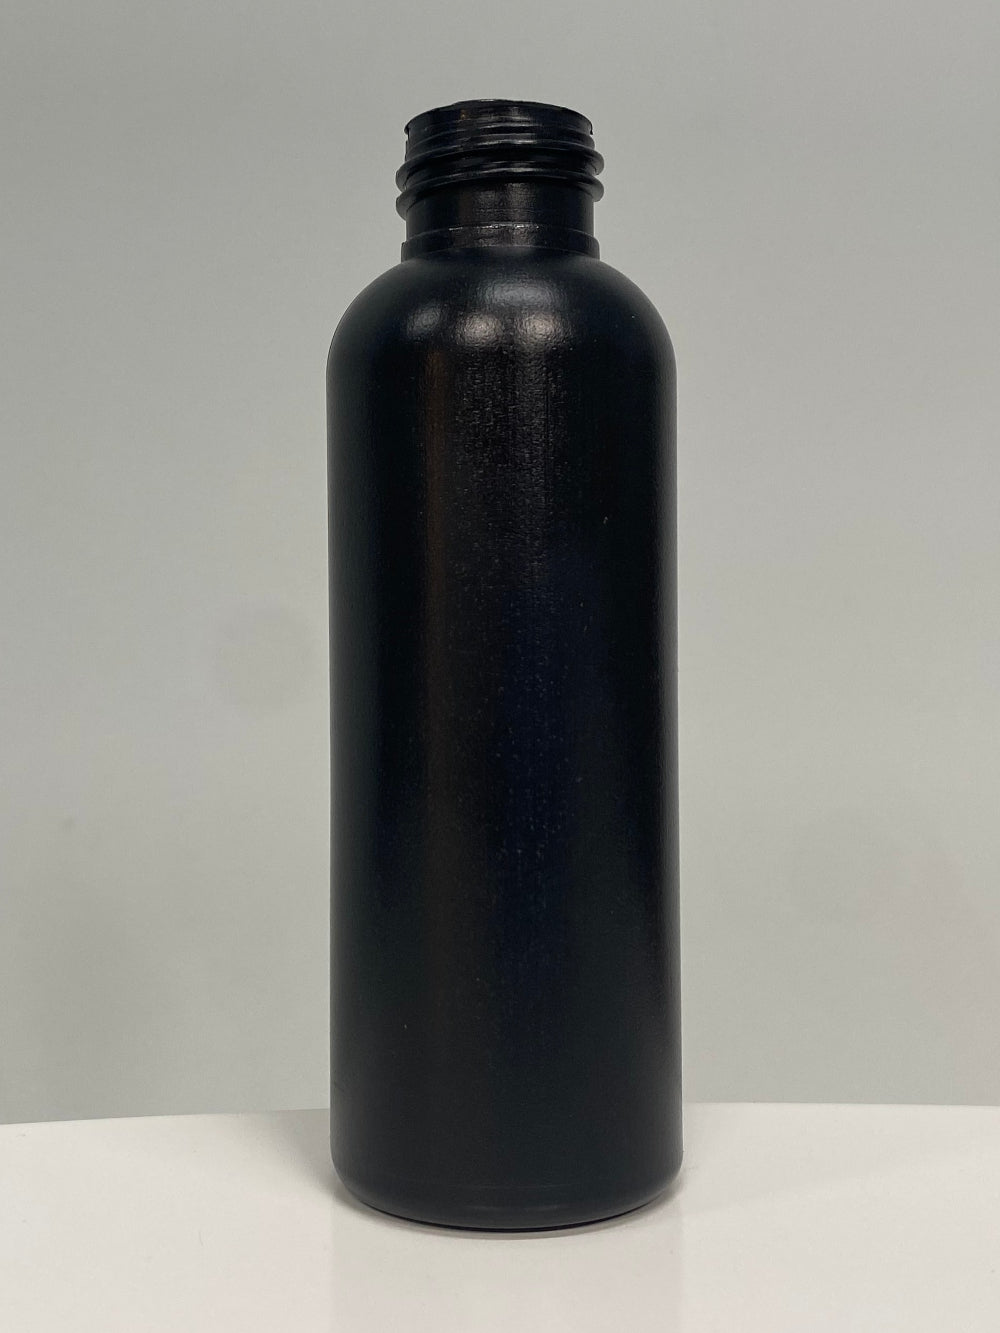 100ml Boston 24/410 HDPE Bottle - (Pack of 100 units)